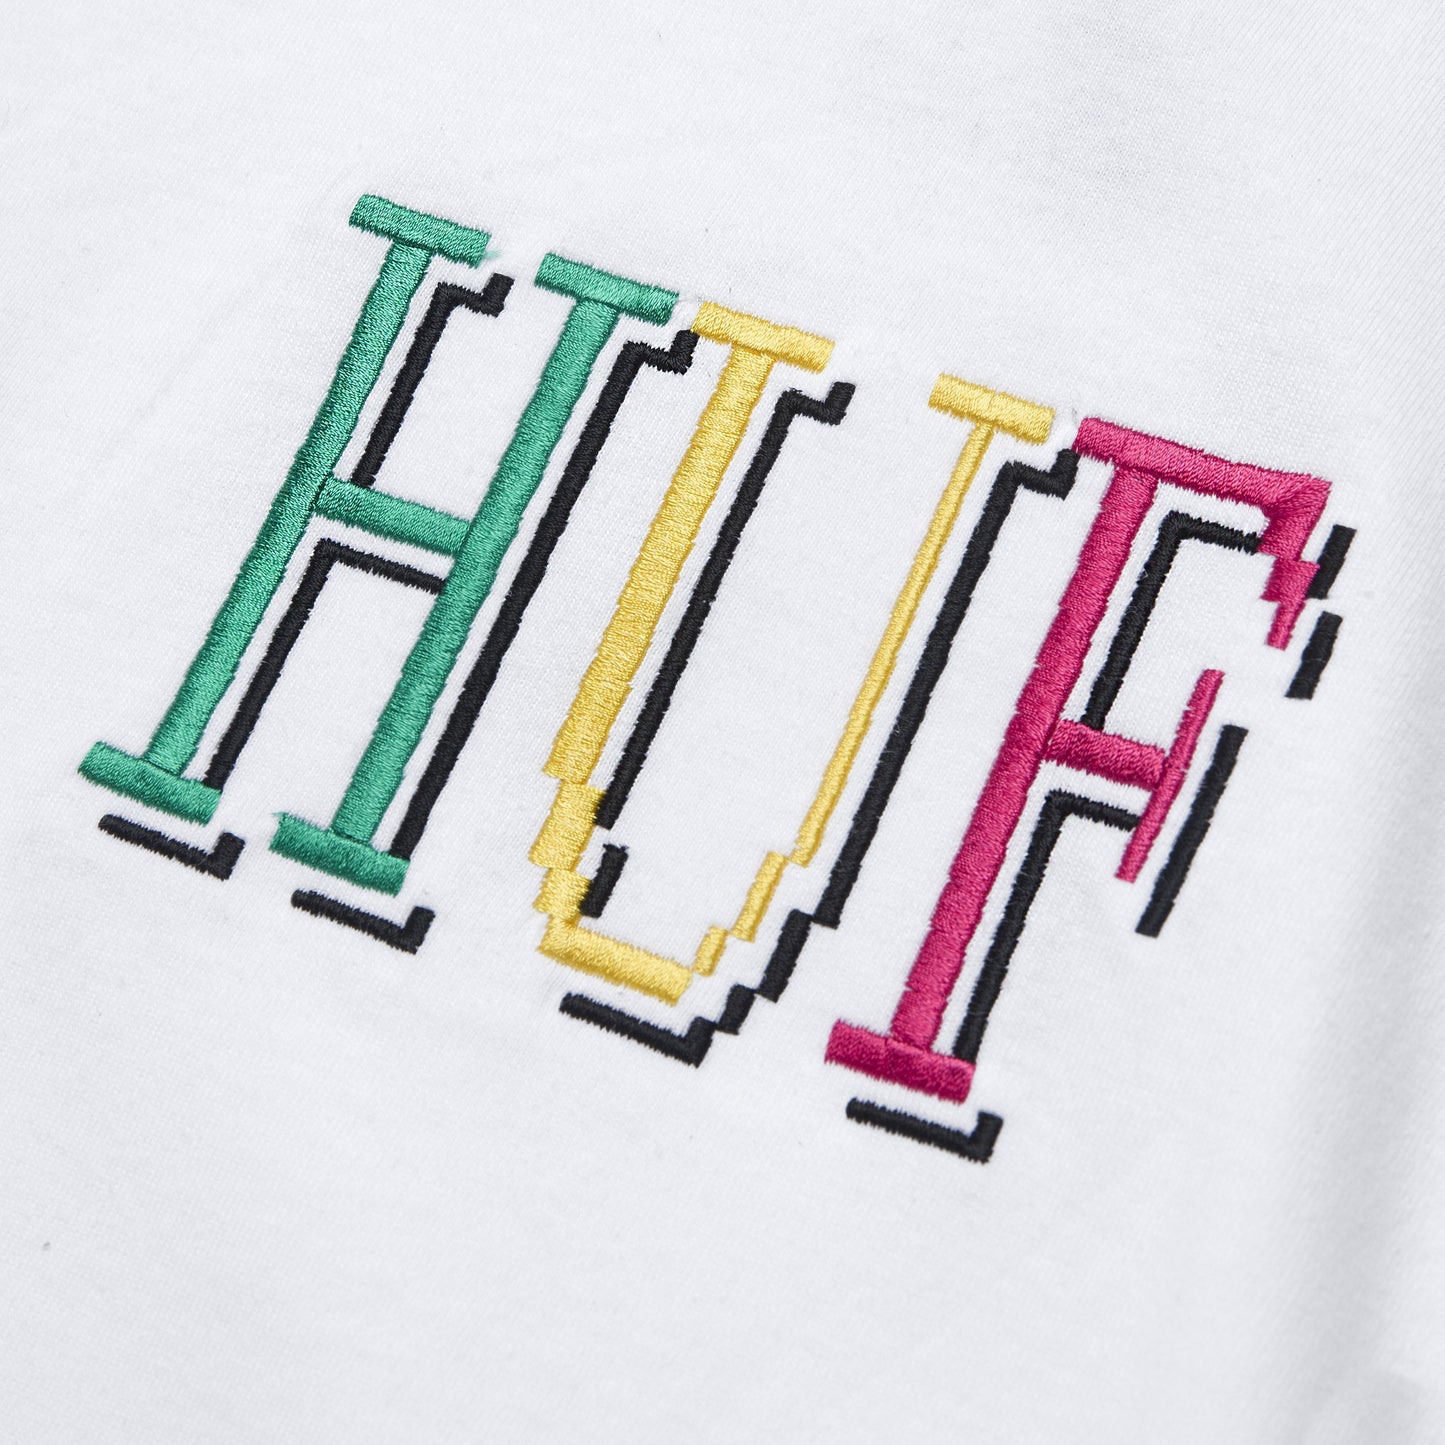 HUF 8-Bit LS T-Shirt